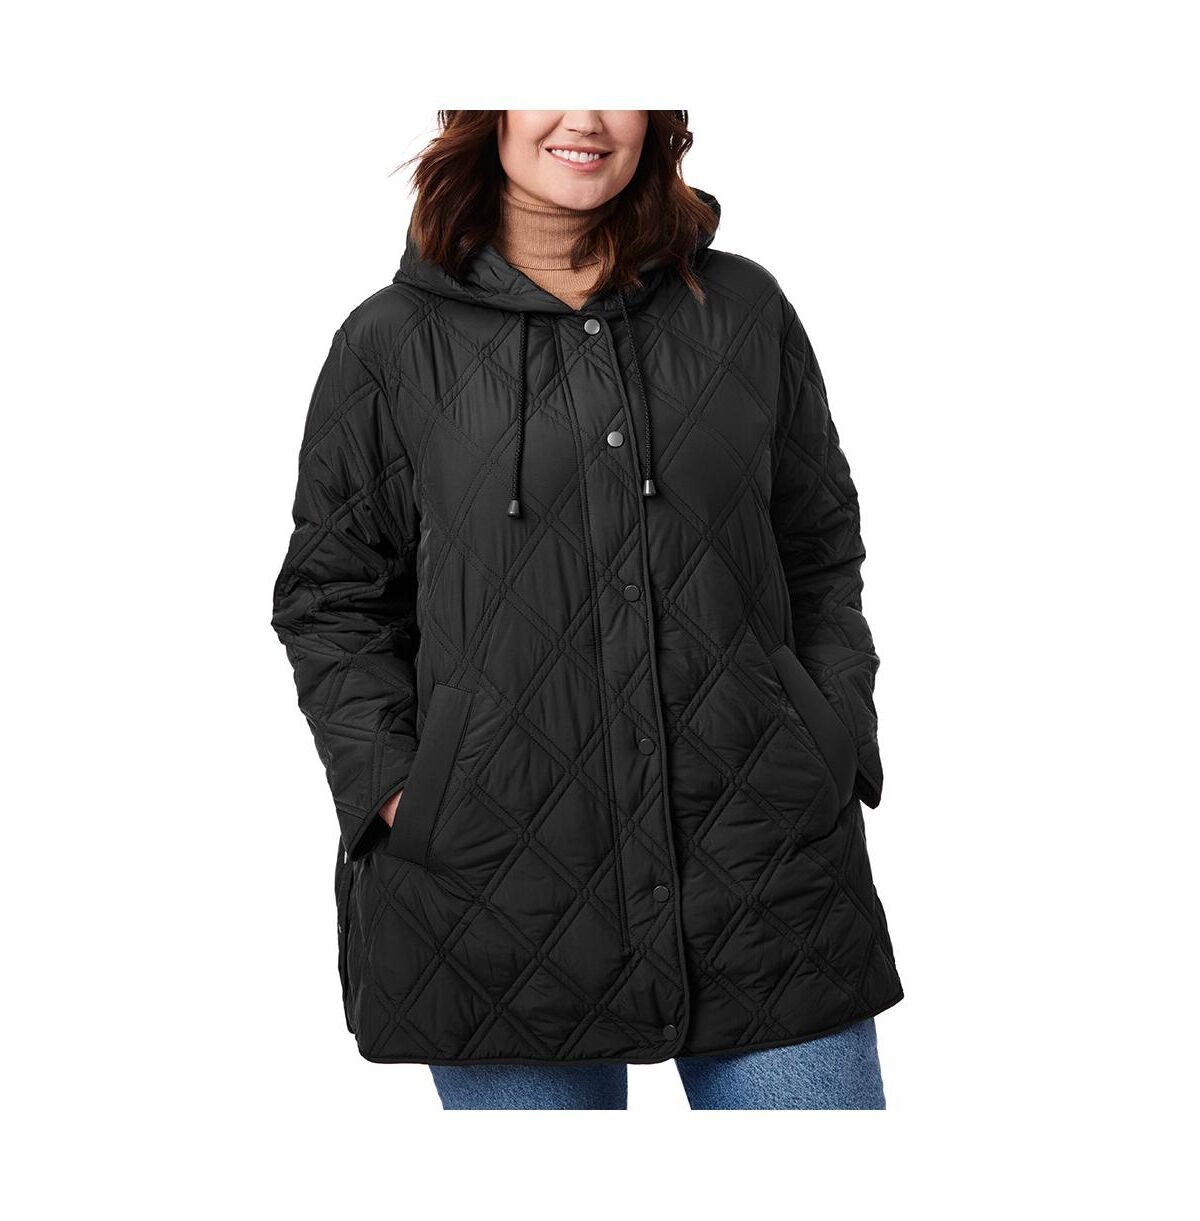 Bernardo Women's Plus-Size Light Weight Quilted Jacket - Black